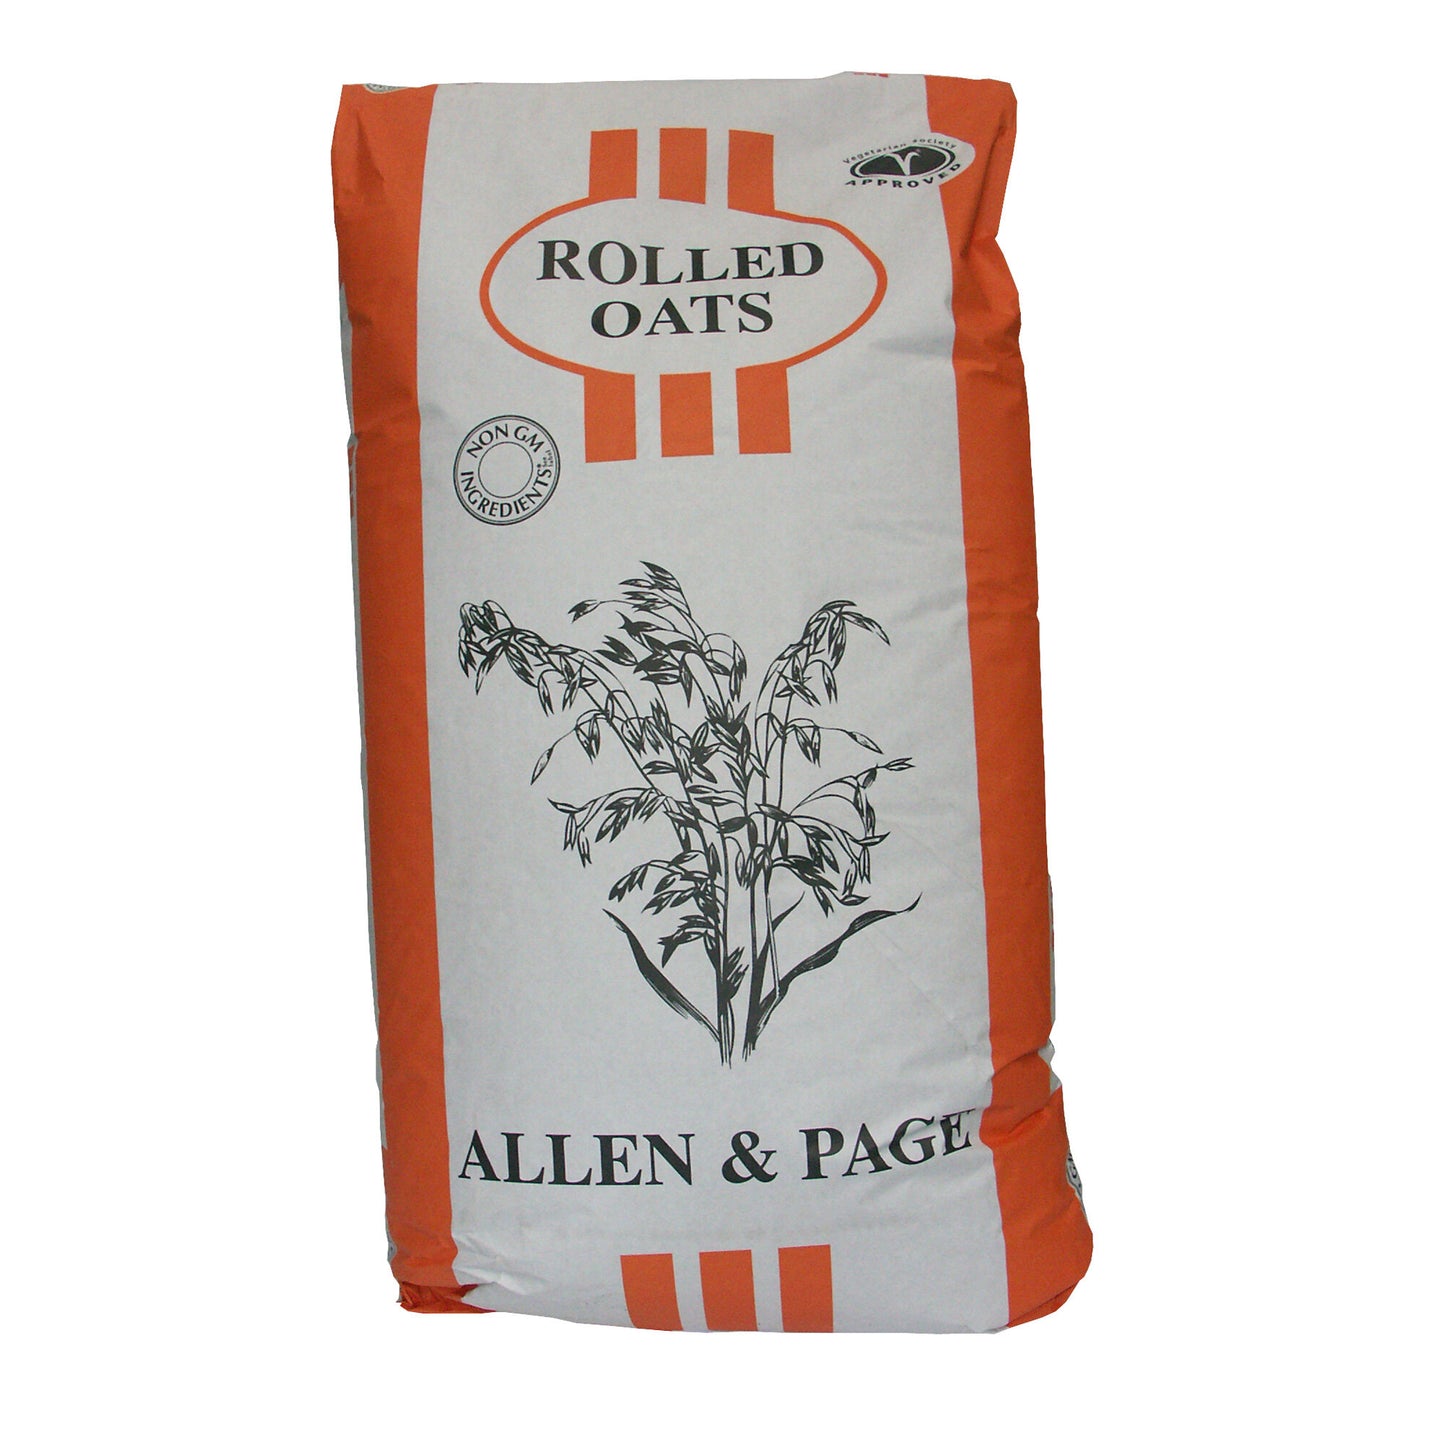 Allen & Page Rolled Oats